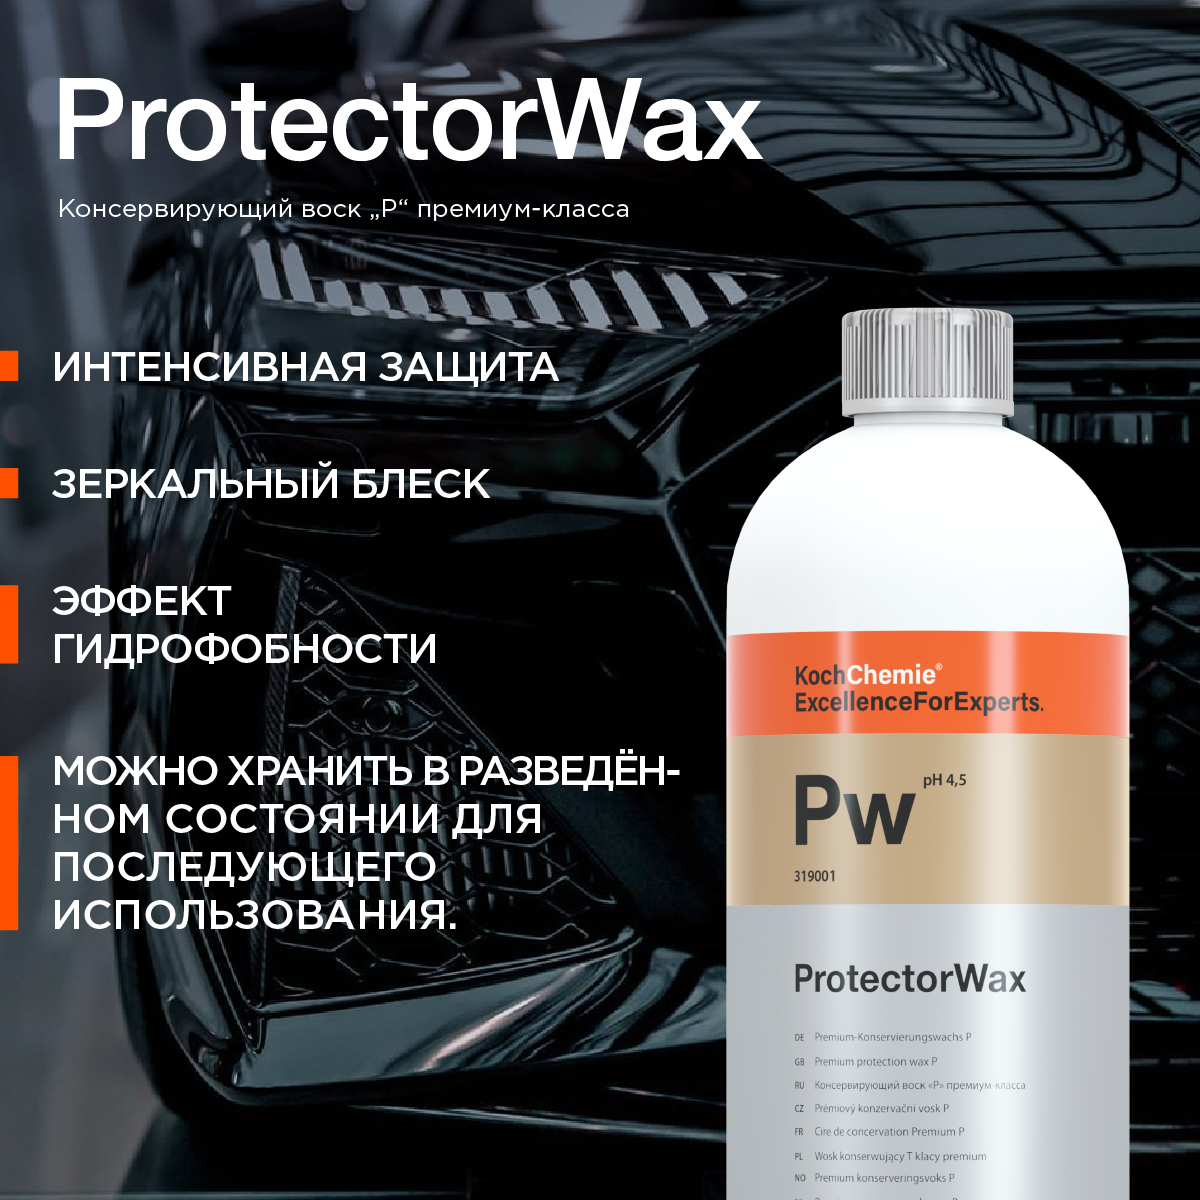 Воск для автомобиля Koch Chemie жидкий ProtectorWax